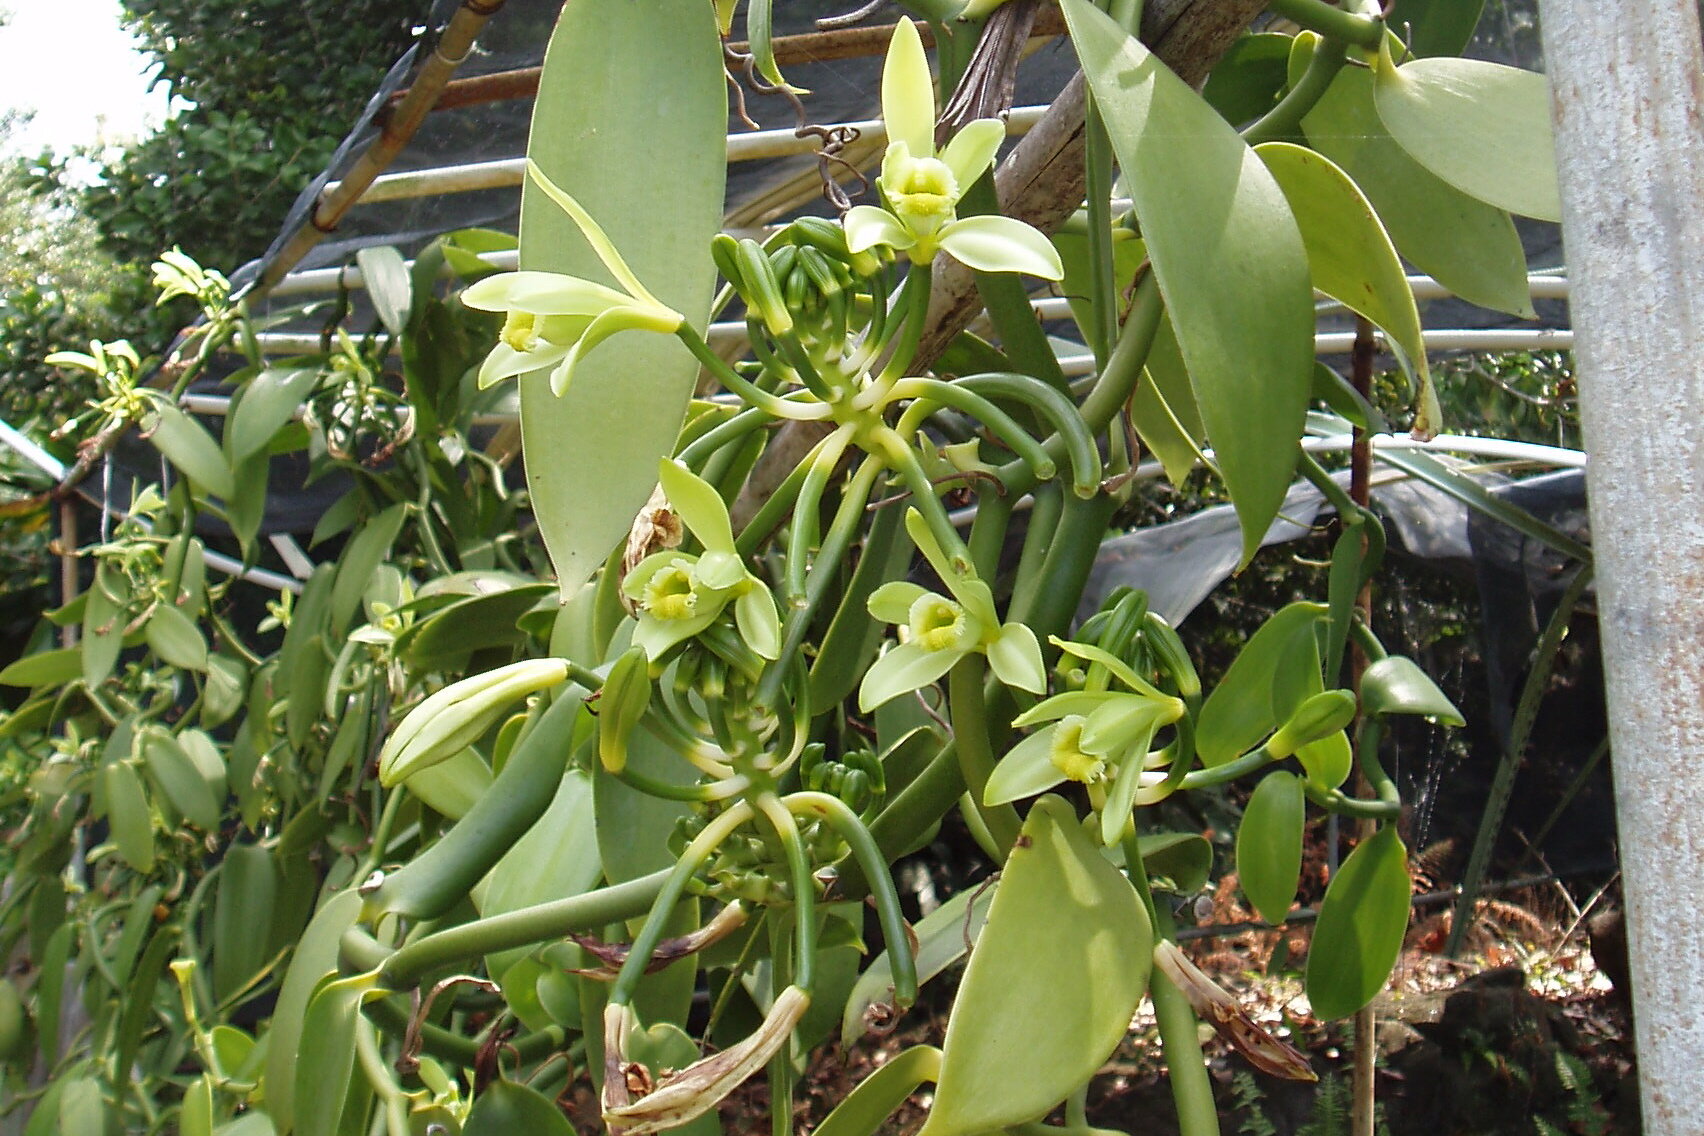 vanilla orchids and green vanilla beans